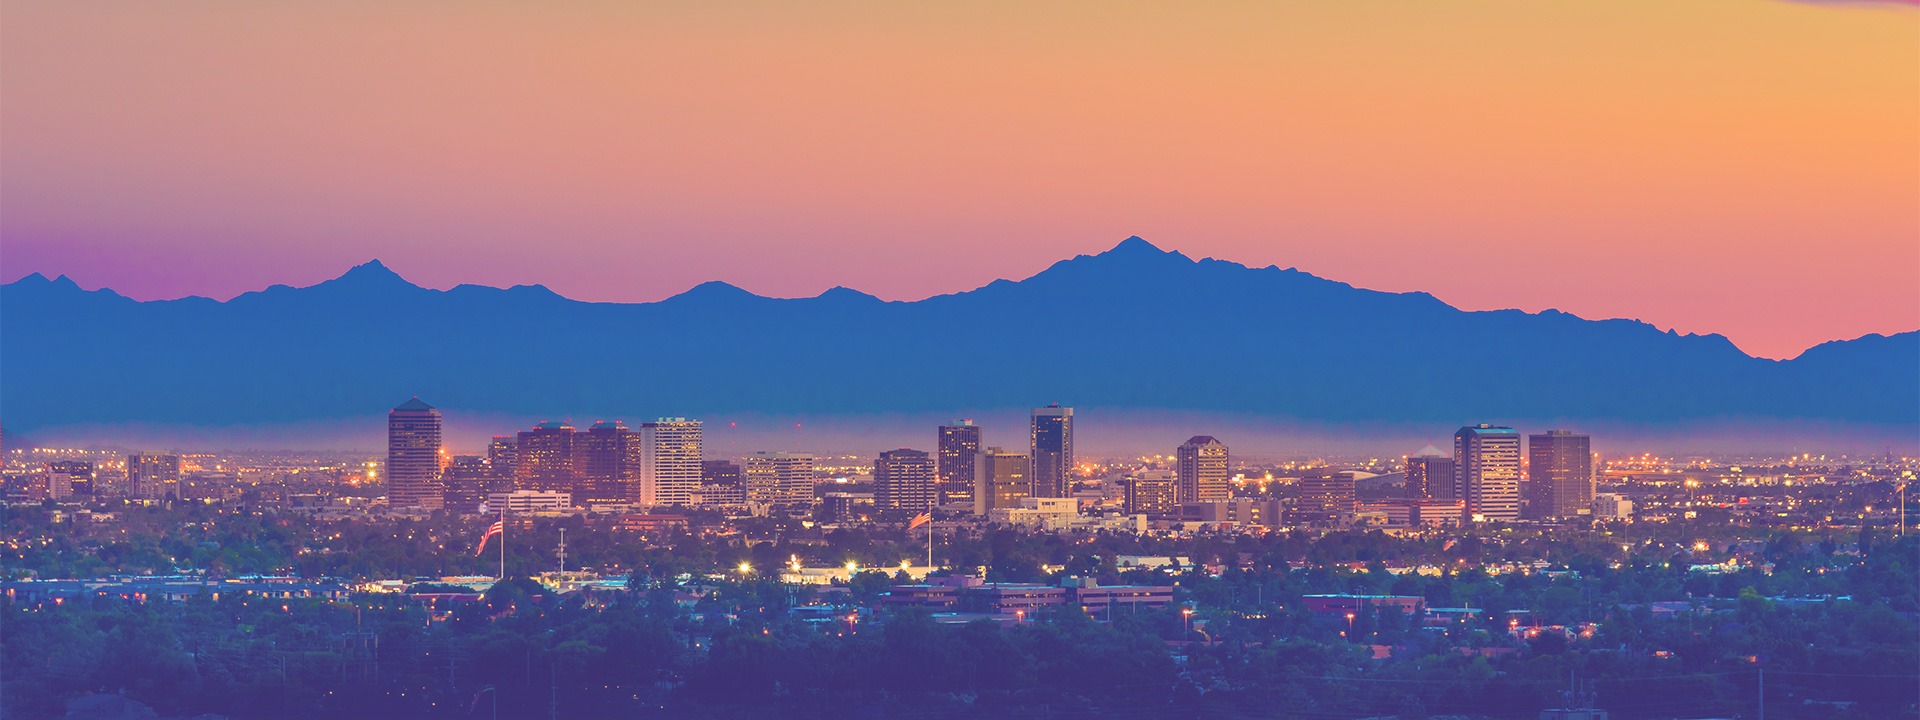 Skyline of Phoenix, Arizona